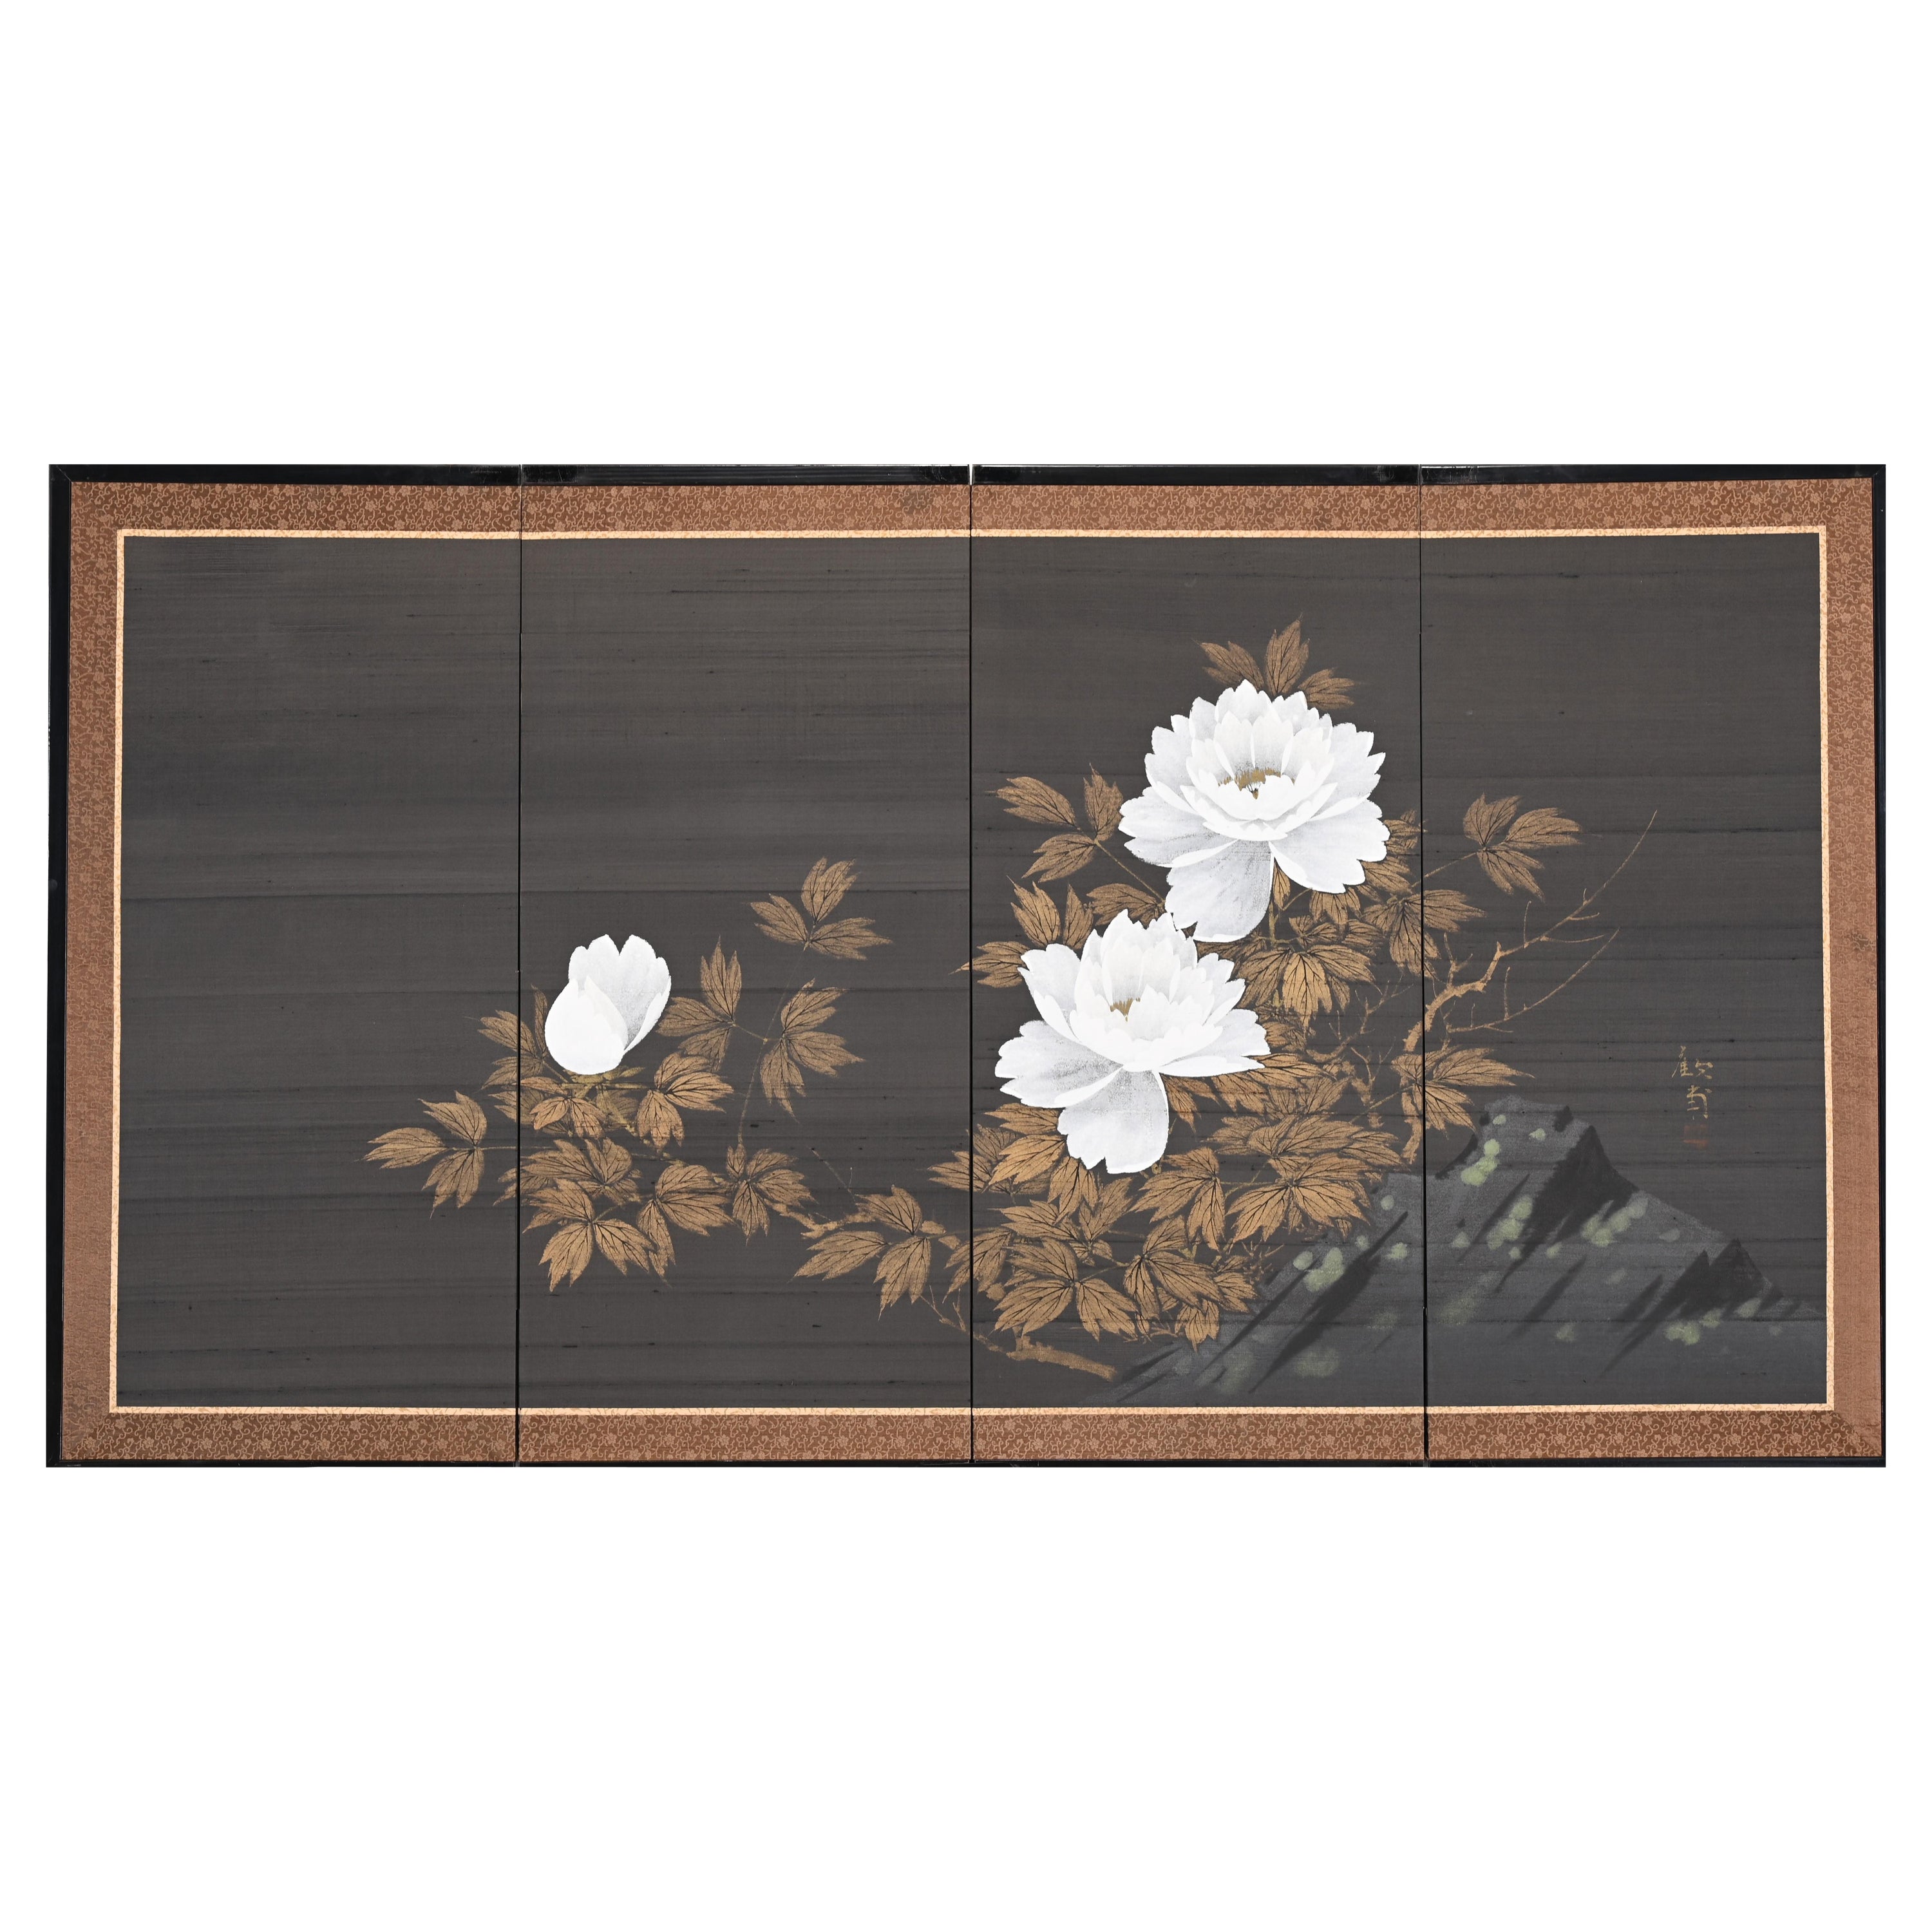 Four Panel Lotus Flower Painting on Silk, Signed, 20th Century